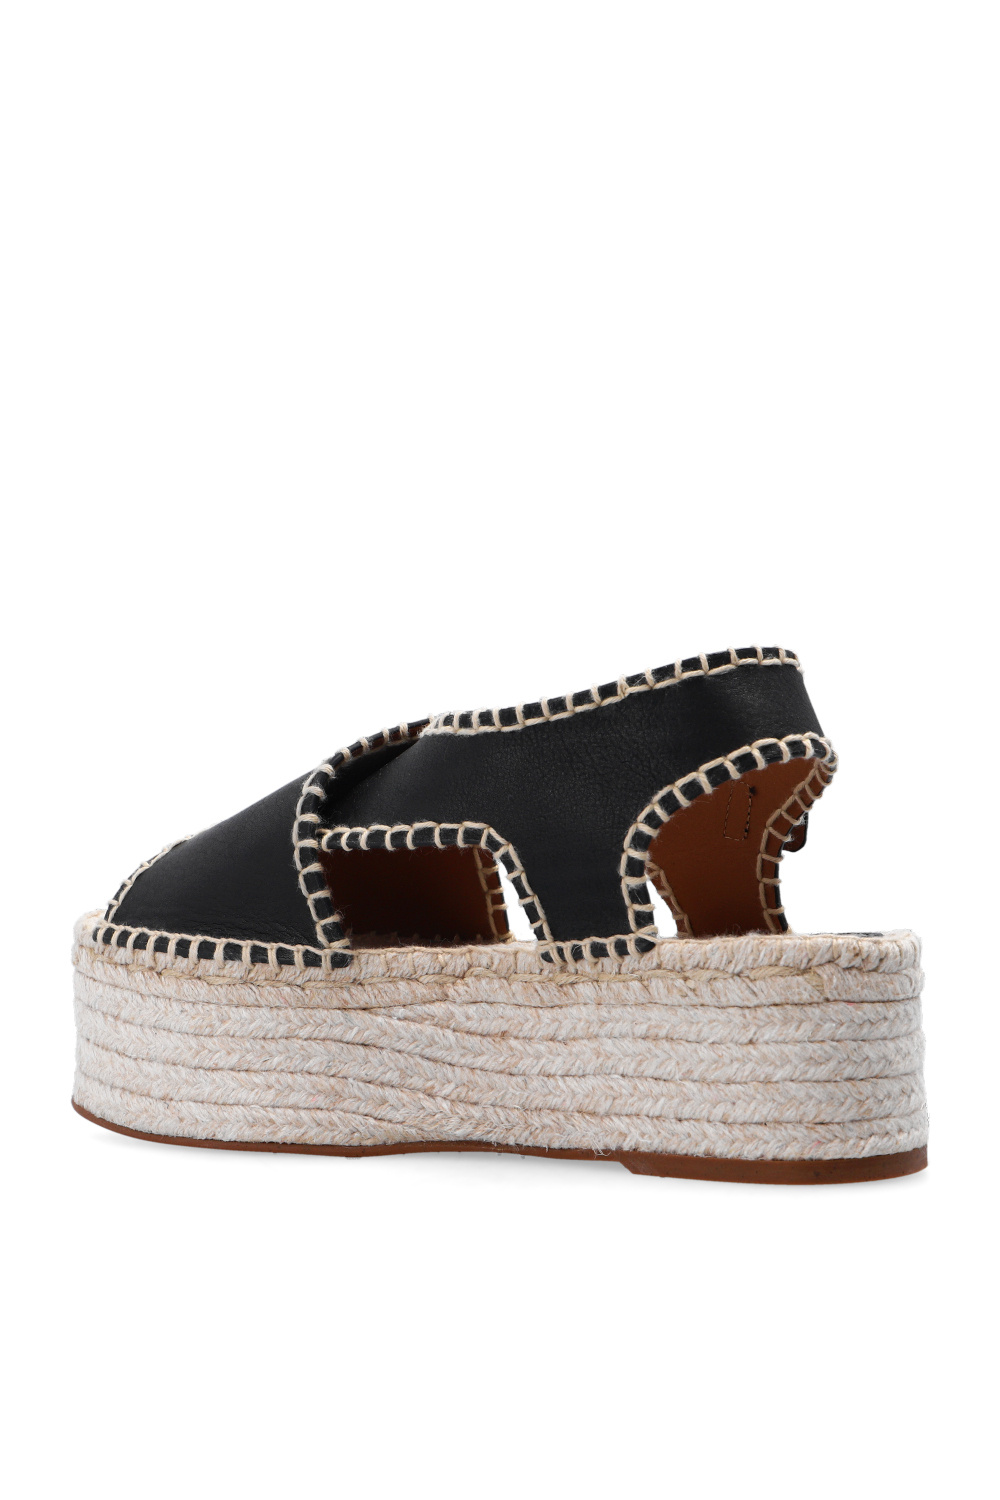 Chloé ‘Lucinda’ platform sandals